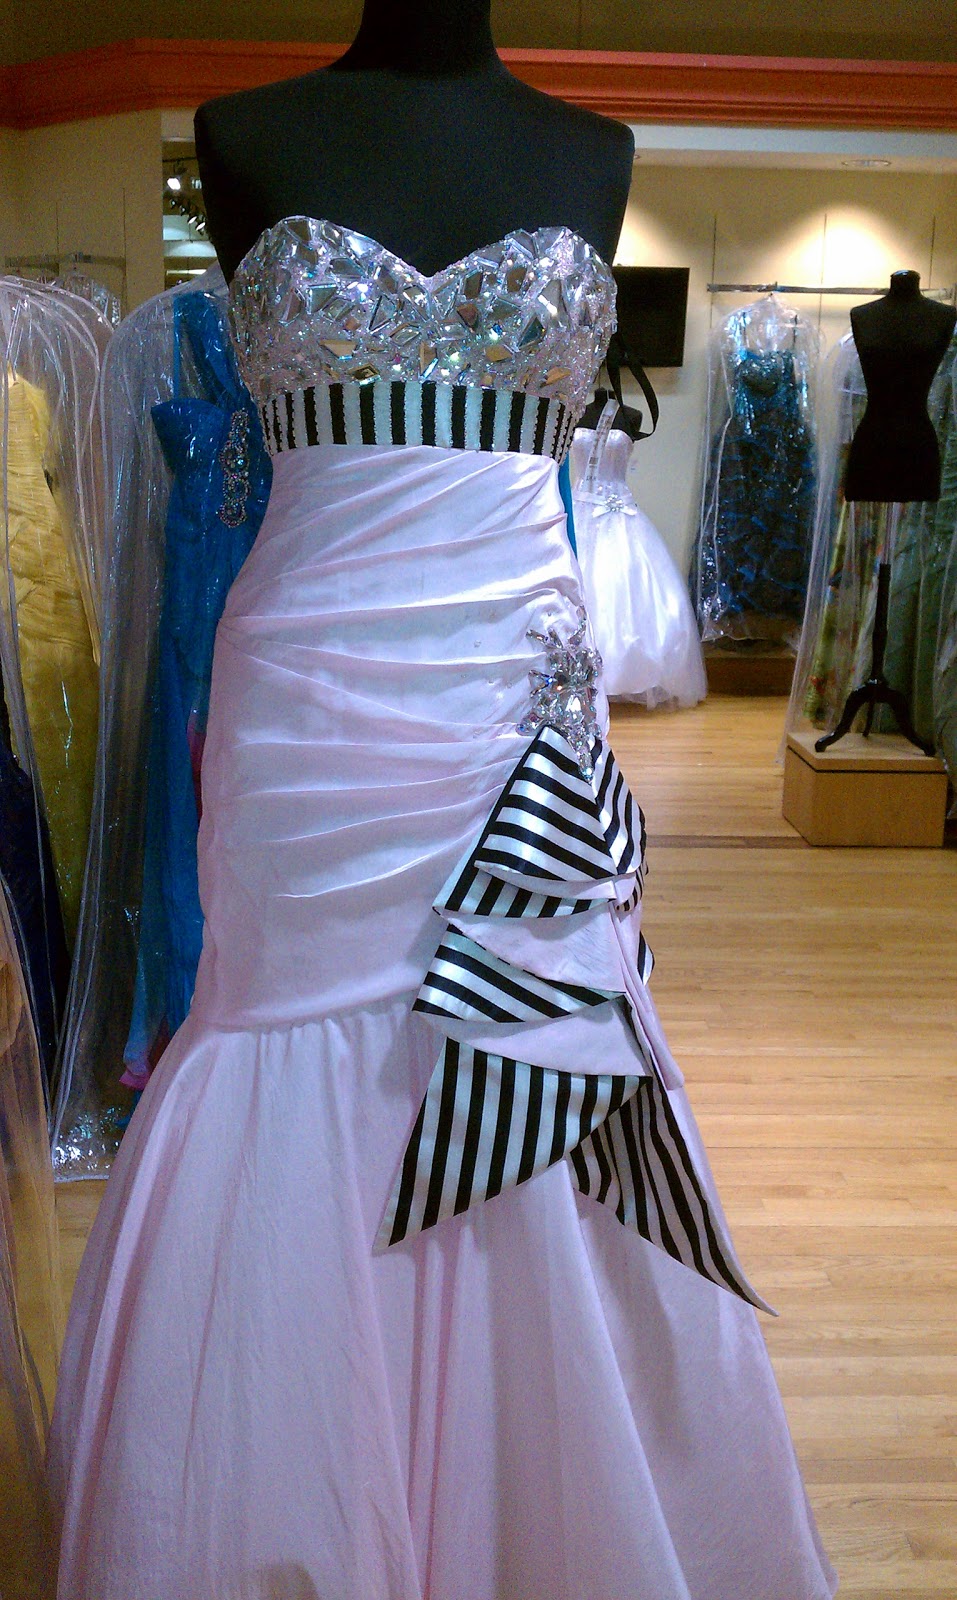 northlake mall prom dresses